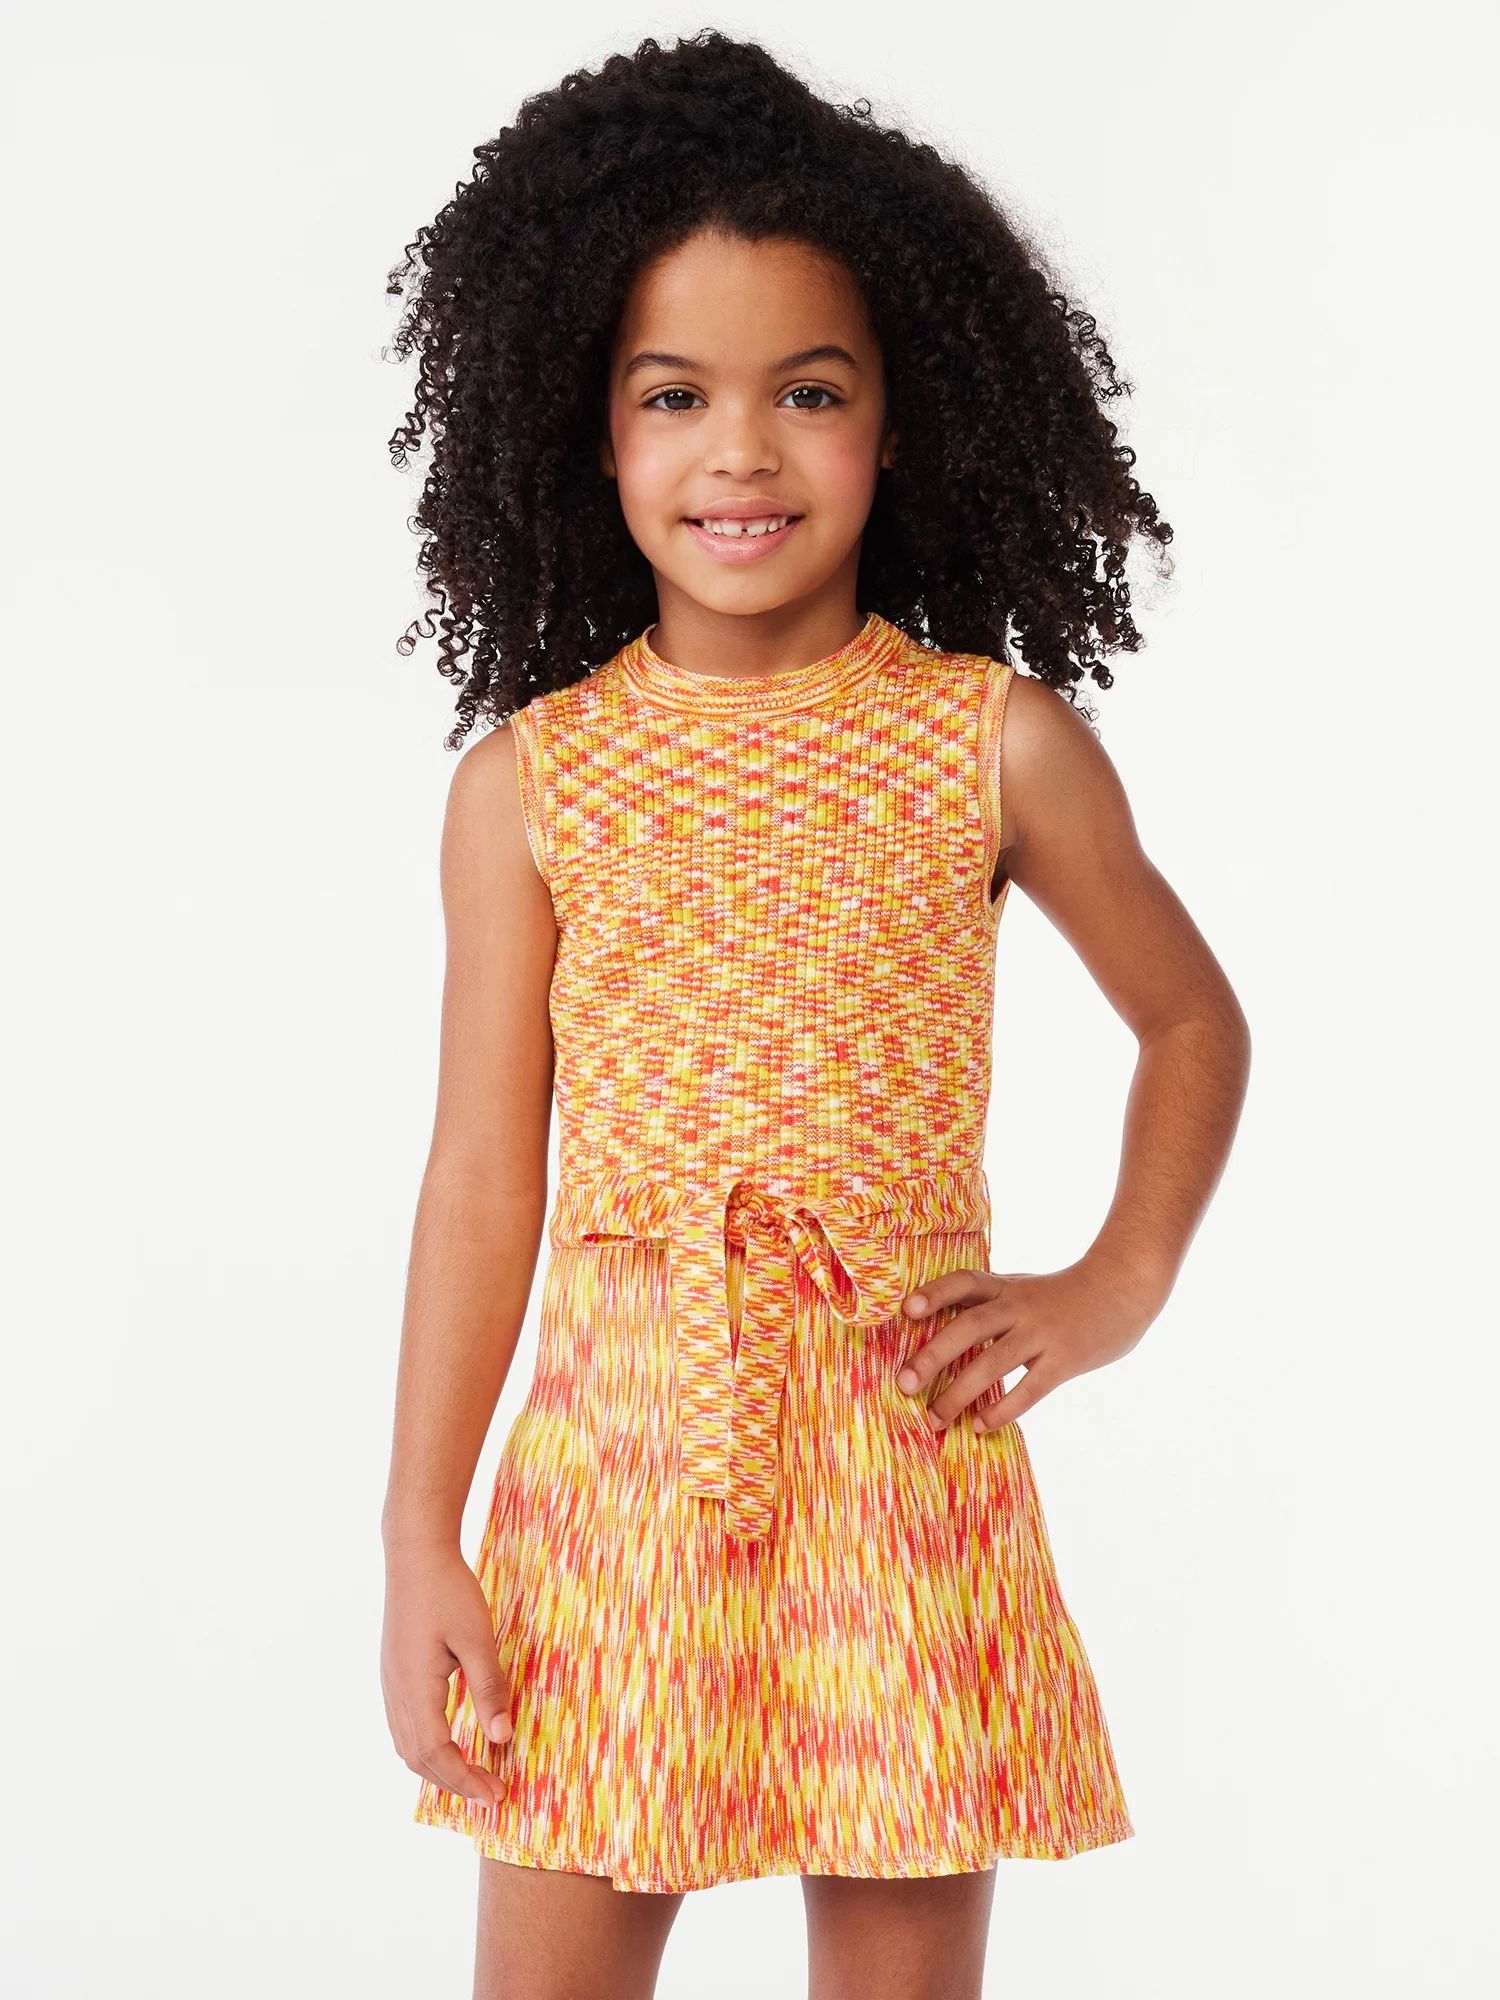 Scoop Girls Sleeveless Space Dyed Ribbed Dress, Sizes 4-12 | Walmart (US)